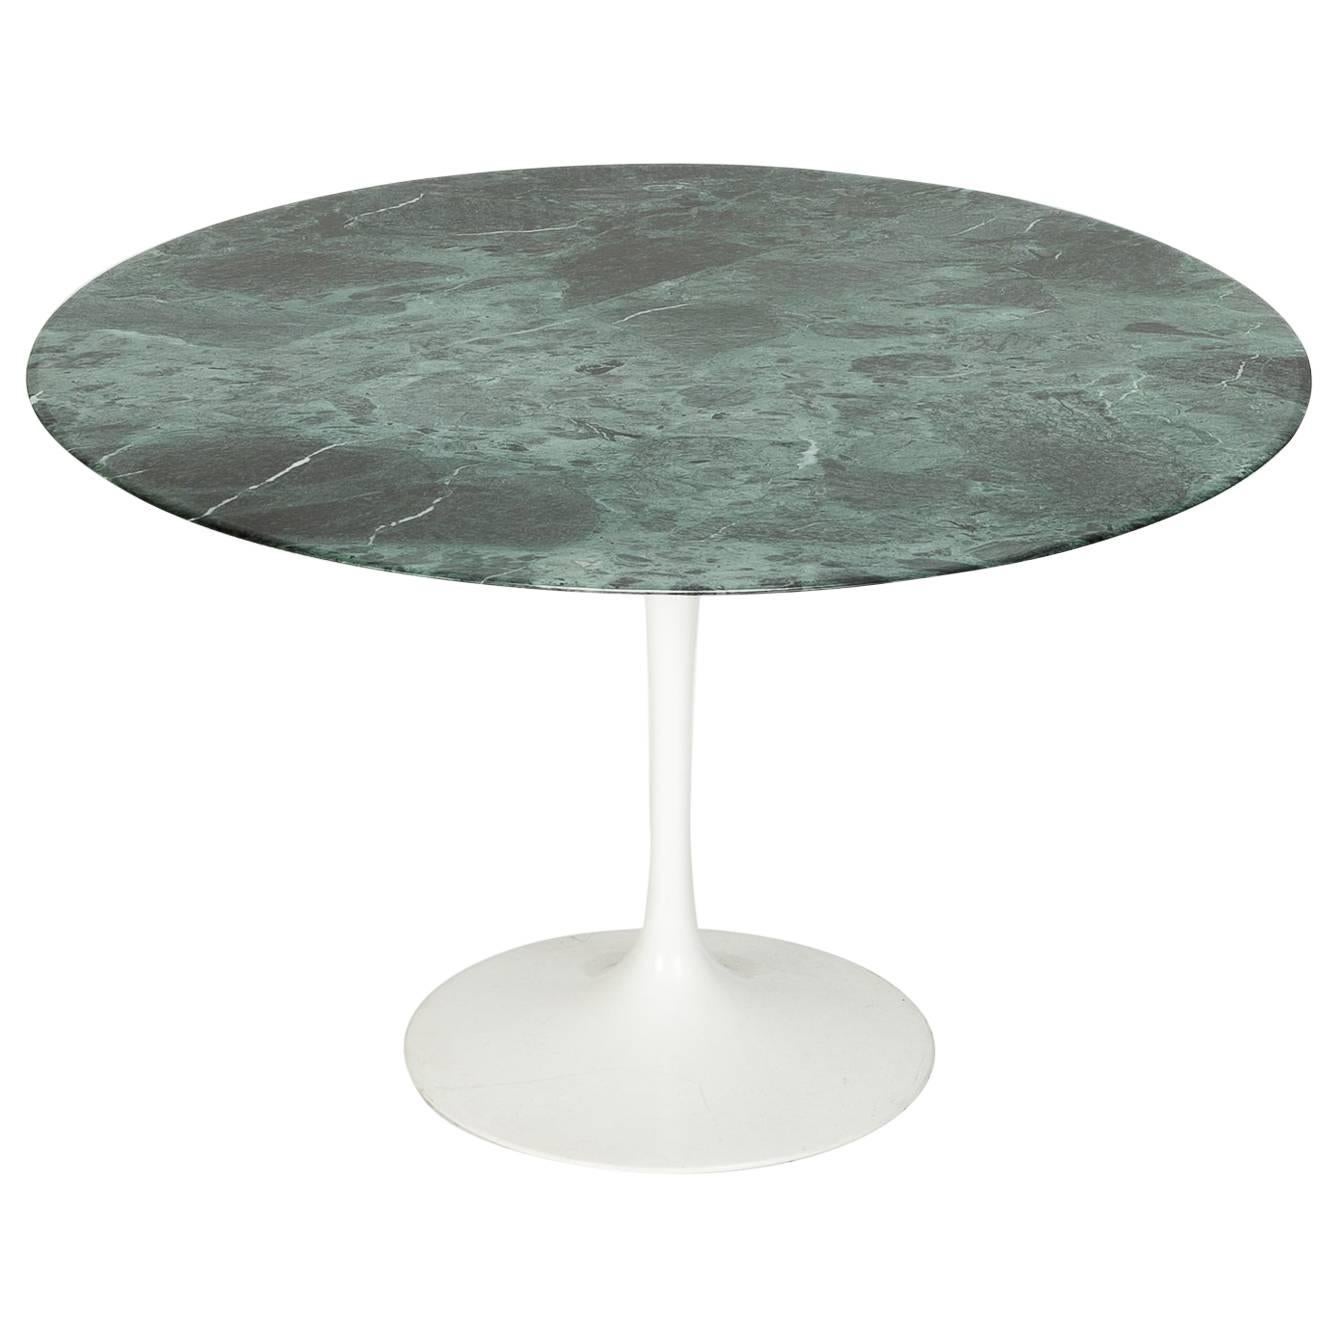 Saarinen Table Knoll International with Verdi Alpi Marble Tabletop, 1970s